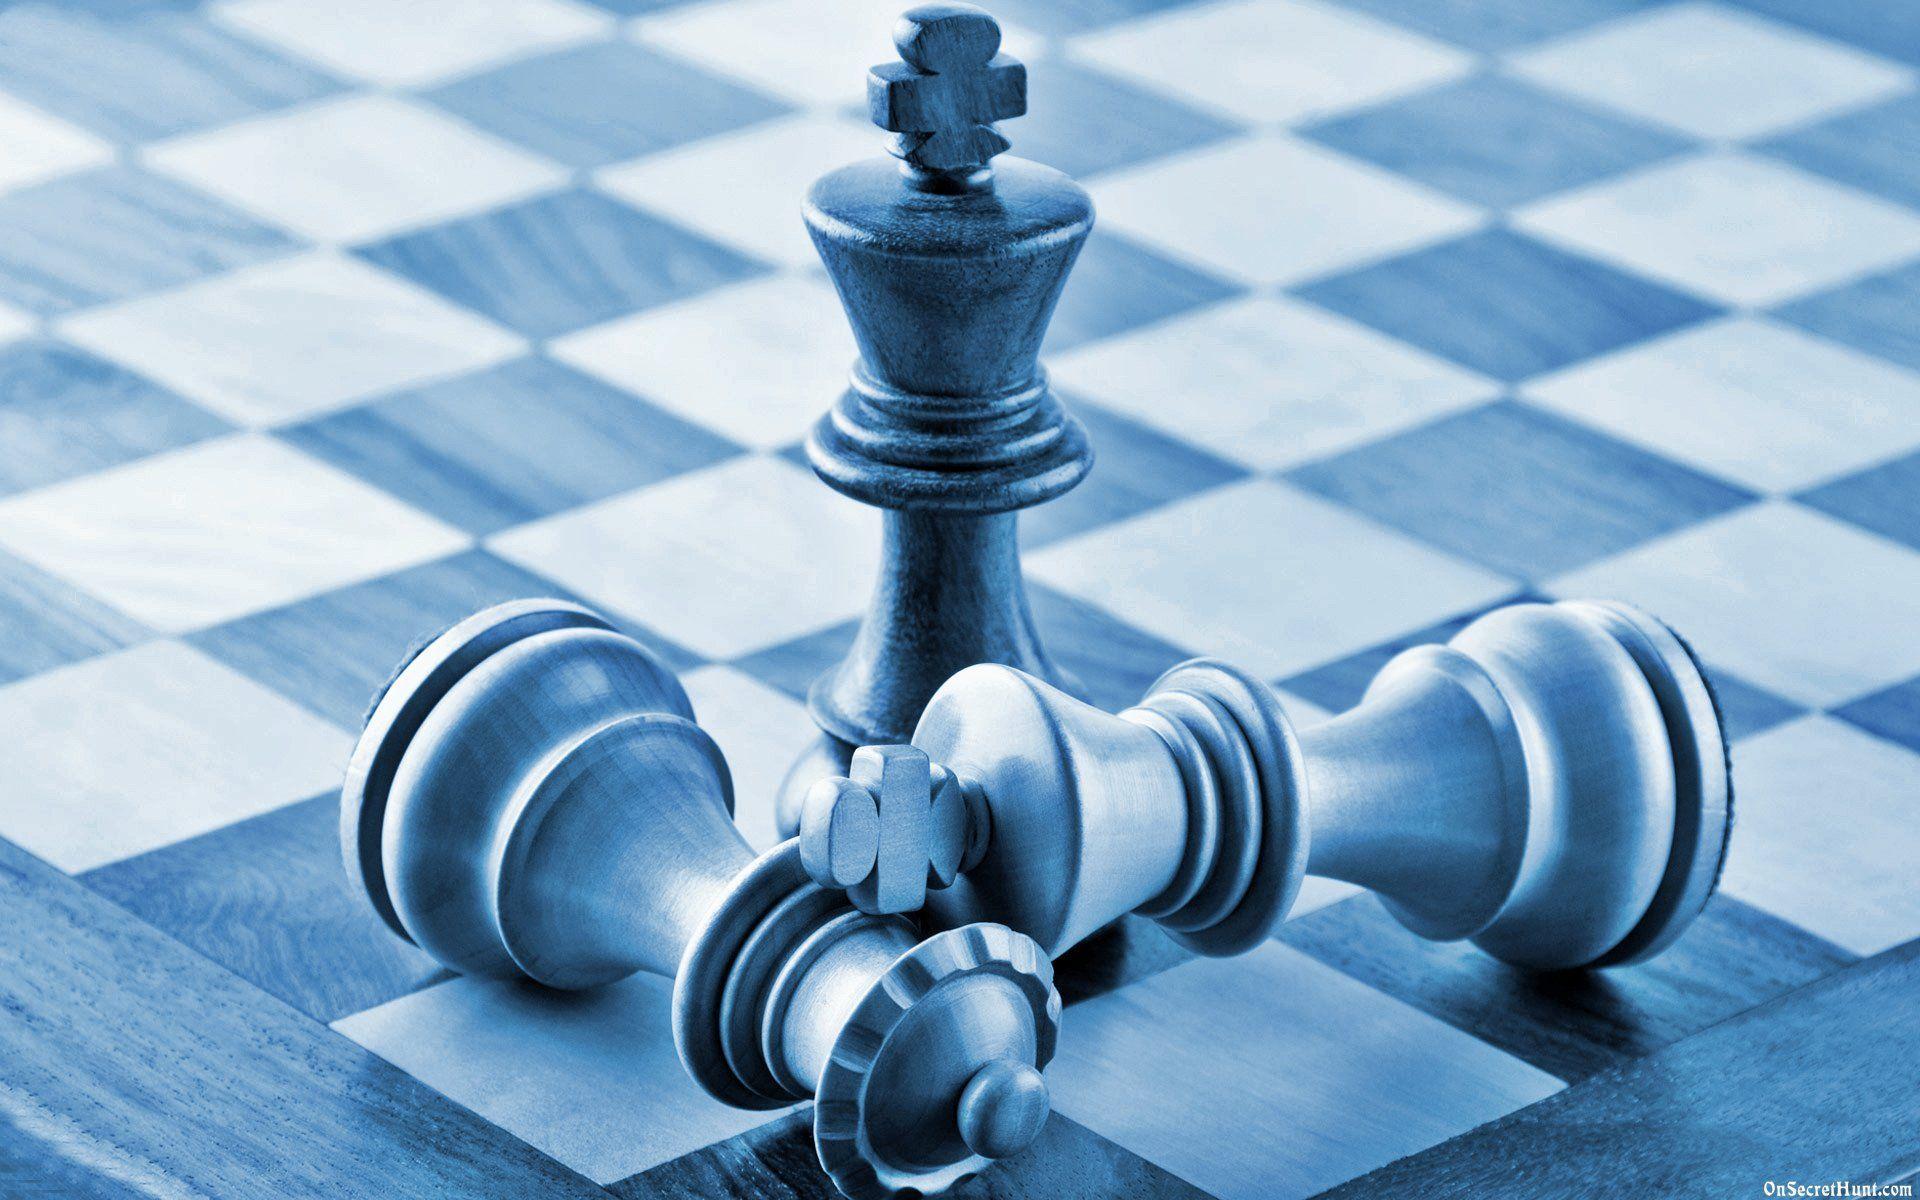 Download wallpaper 950x1534 king, chess, sports, game, minimal